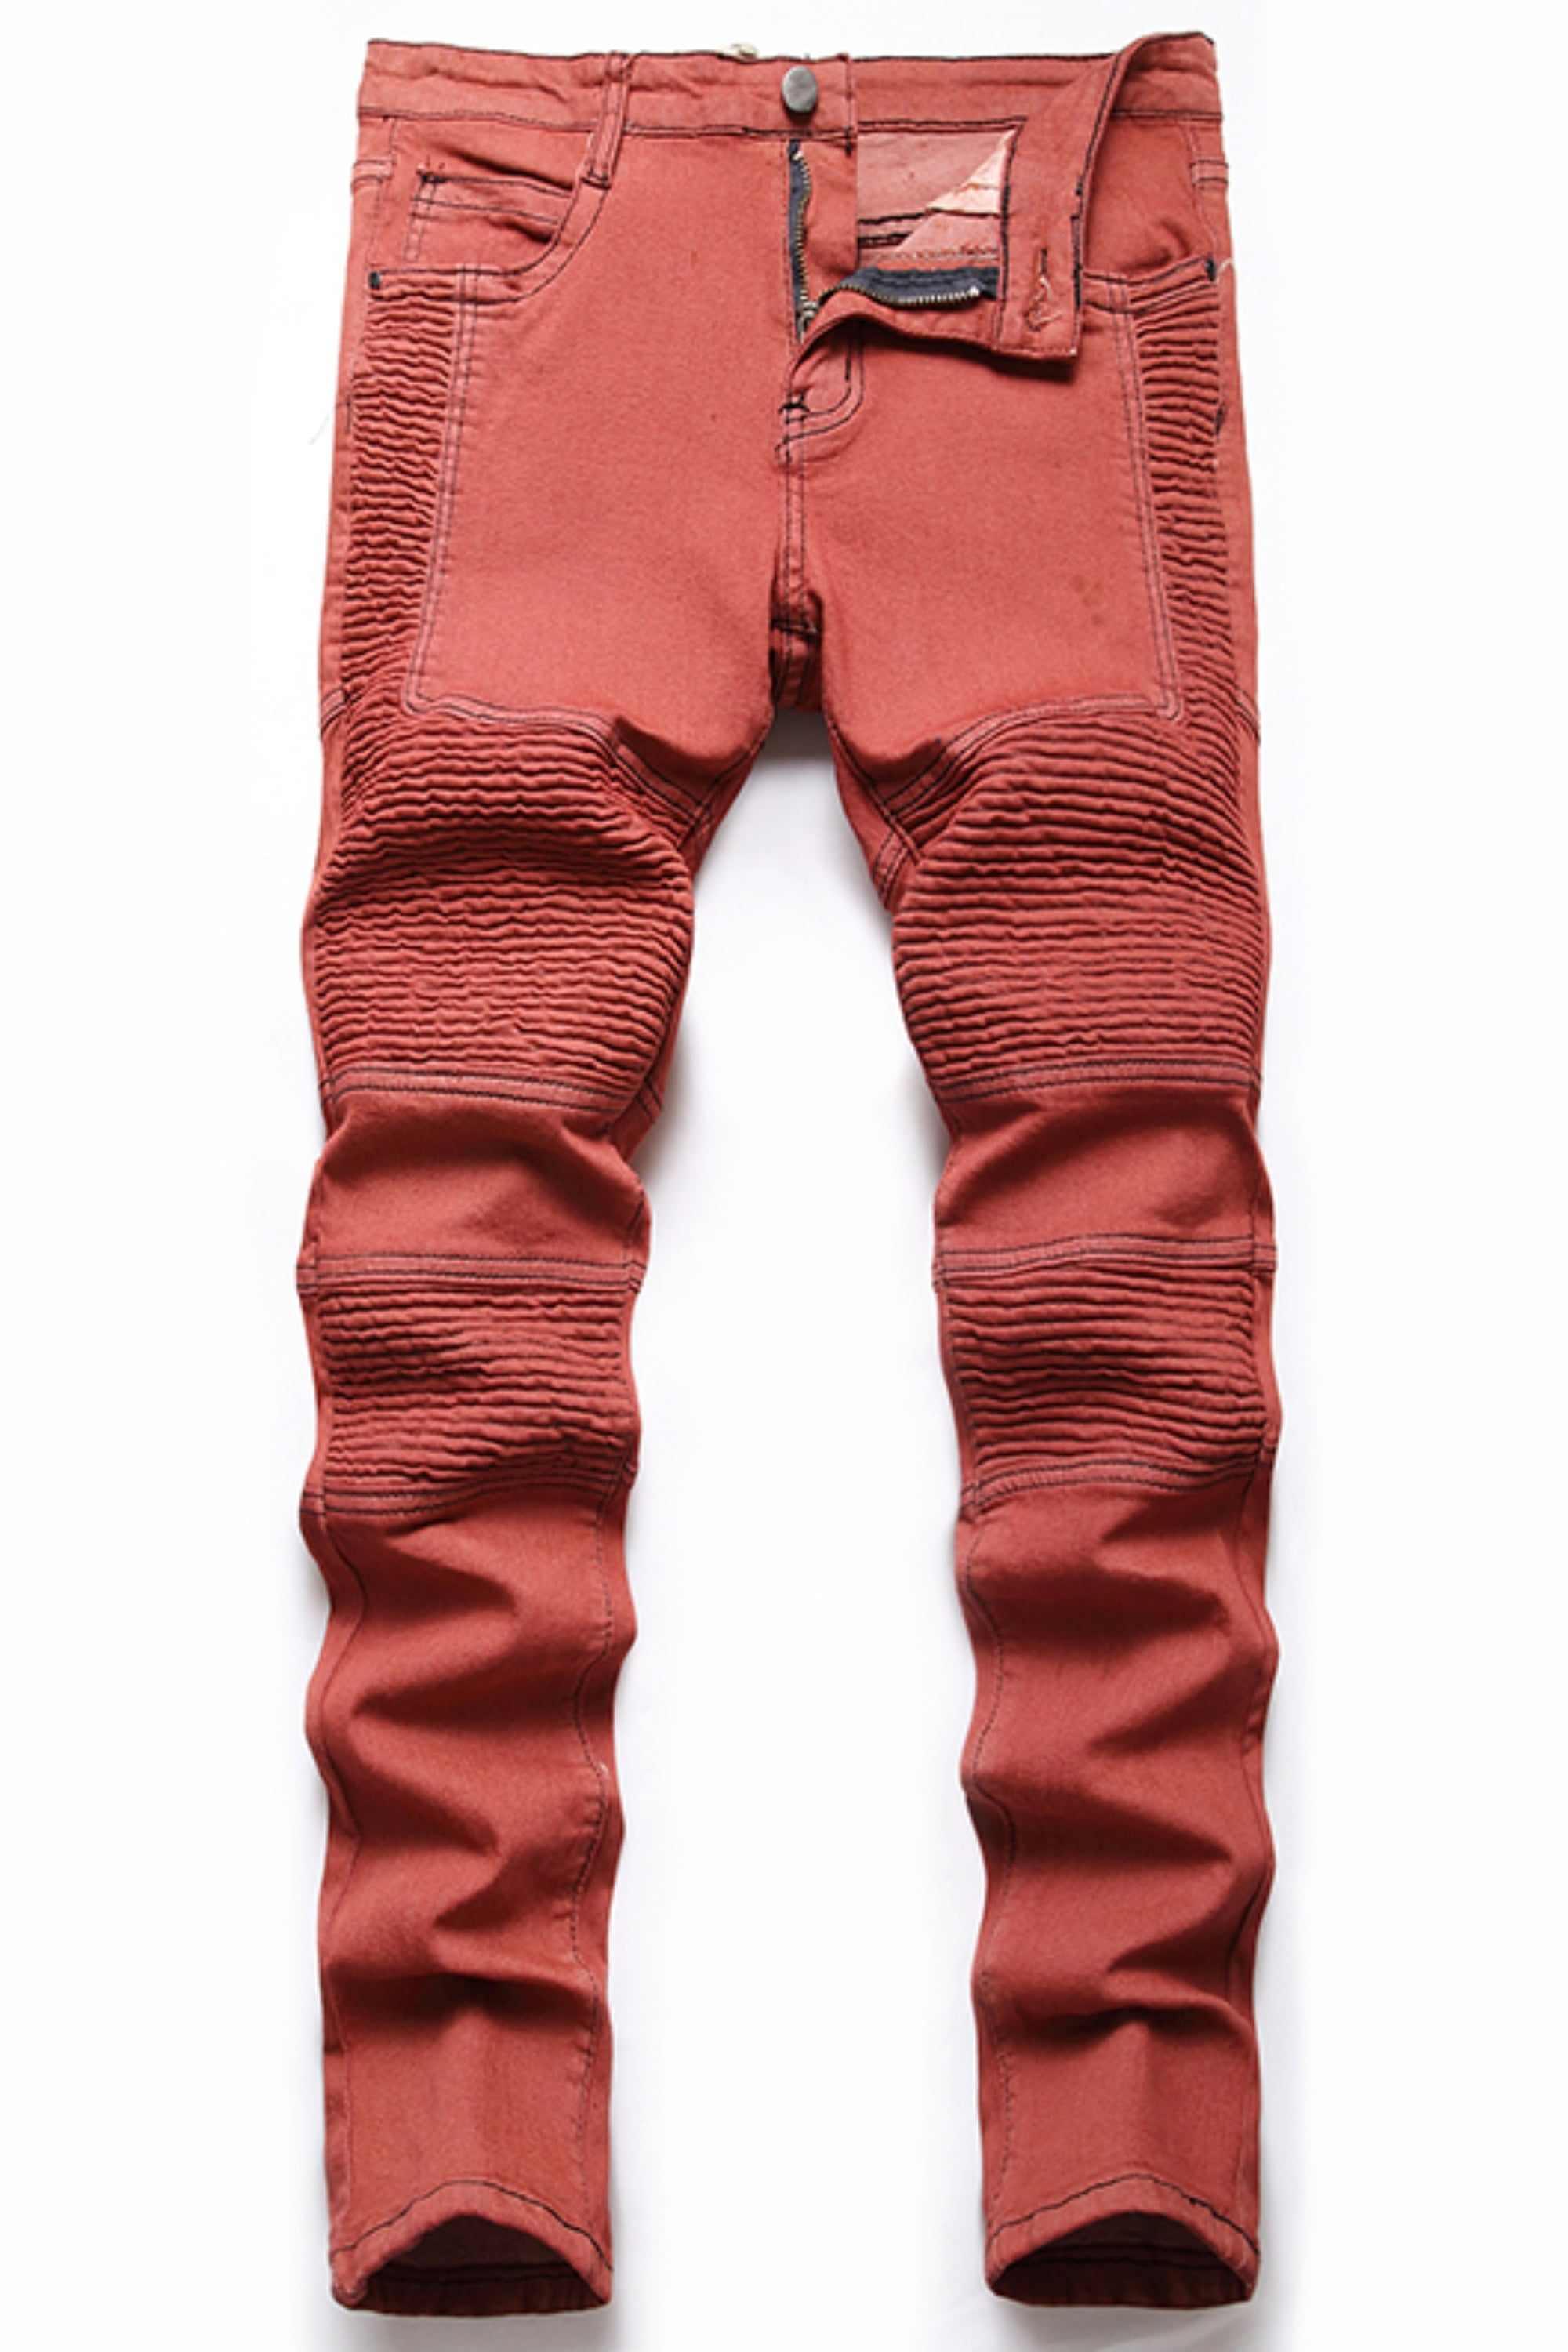 Keevoom Boys Fashion Slim Jeans Wrinkled Stretch Fit Denim Pants ...